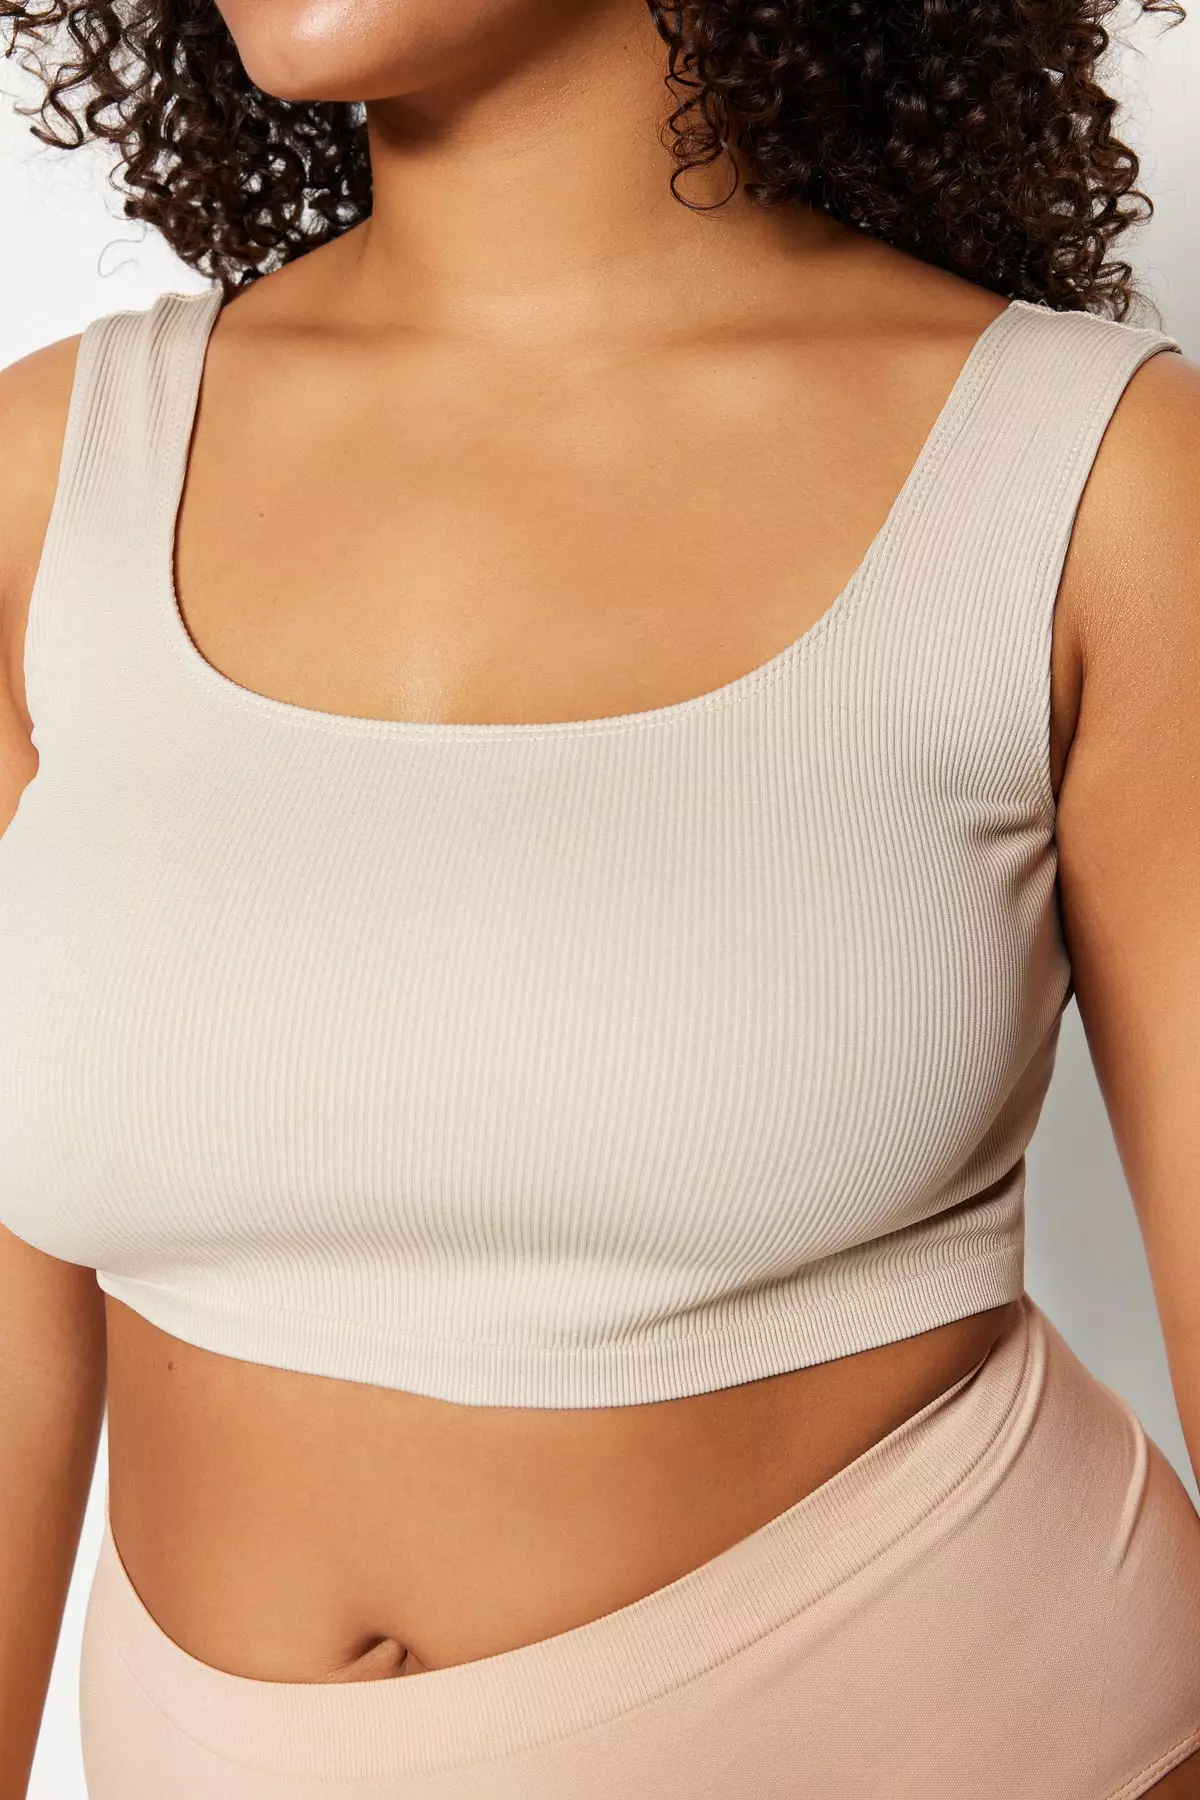 Buy Croptop Bra For Women Plus Size online